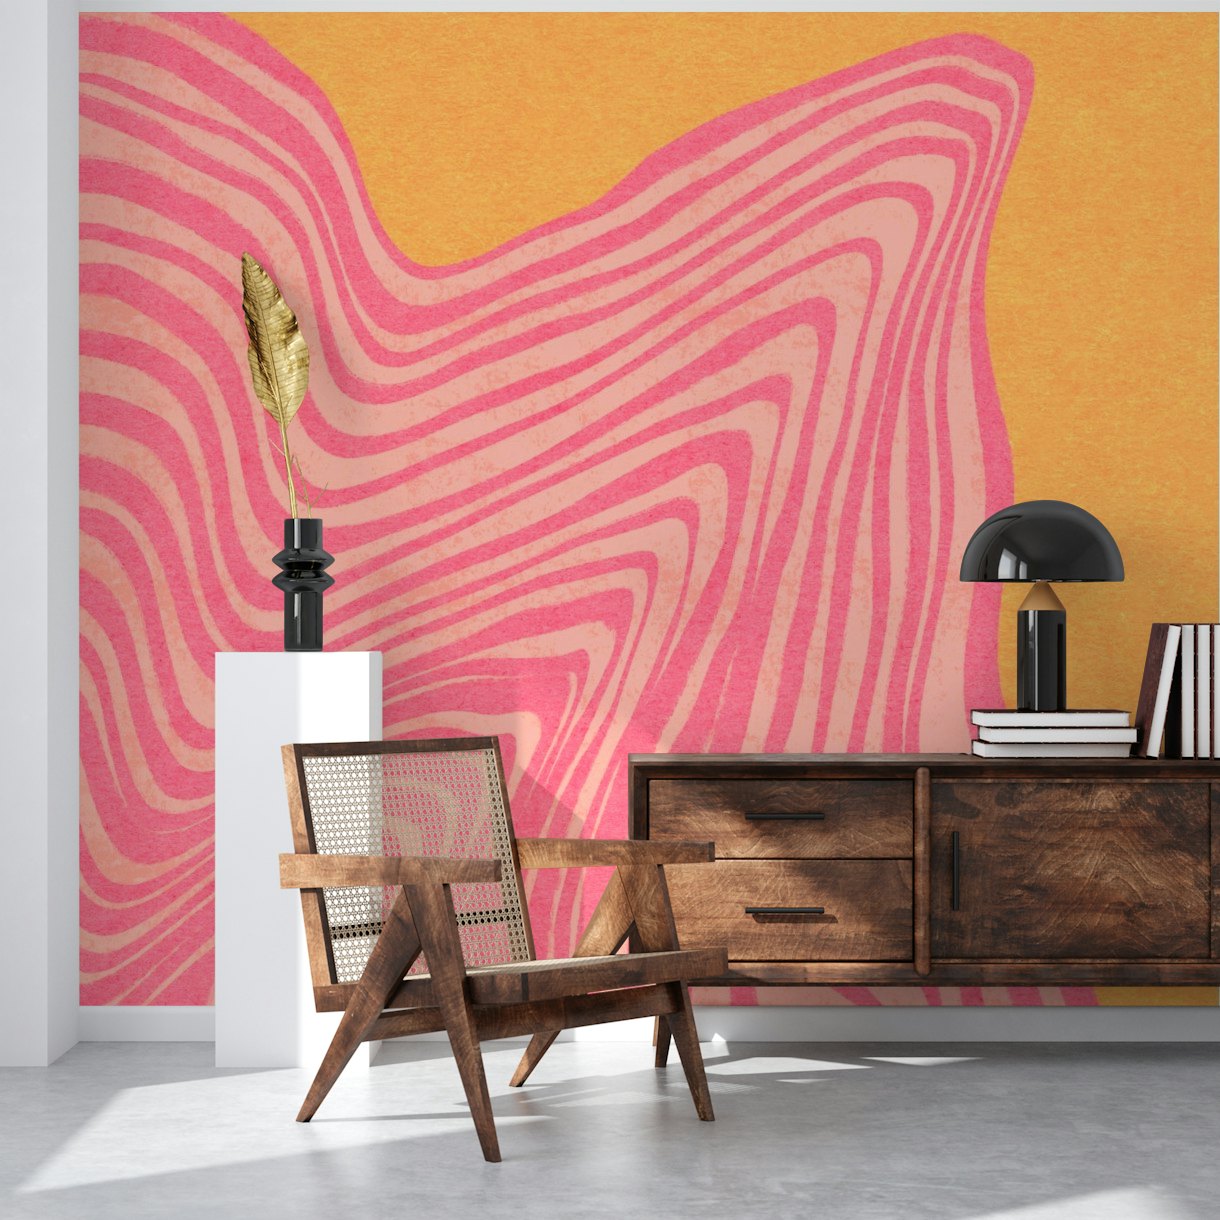 Trippy Waves Pink Orange wallpaper